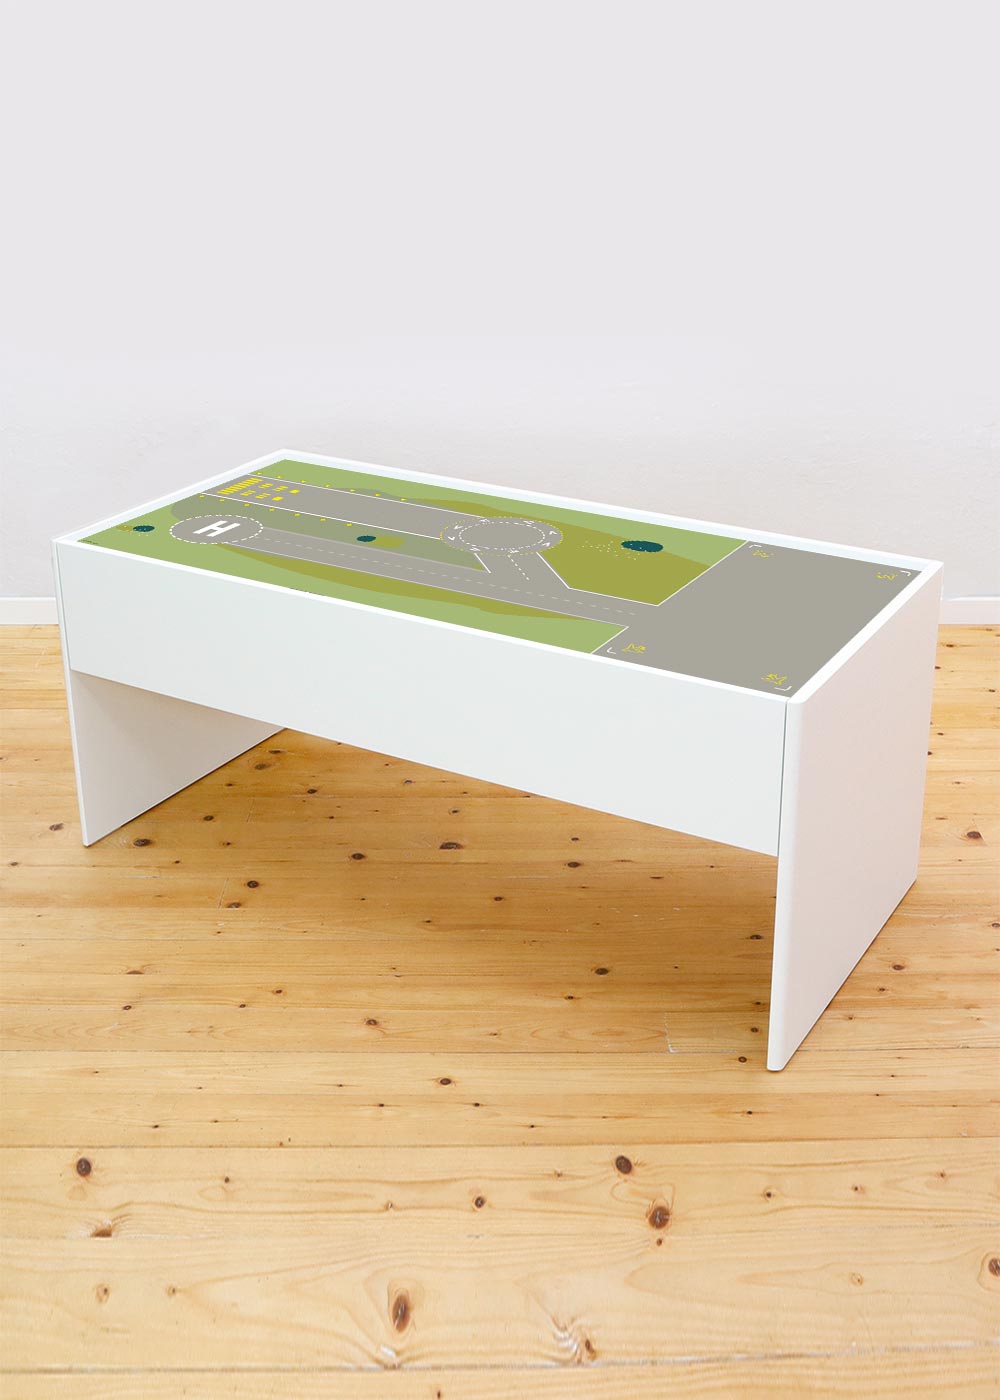 Ikea Dundra Spieltisch Landebahn Komplettansicht